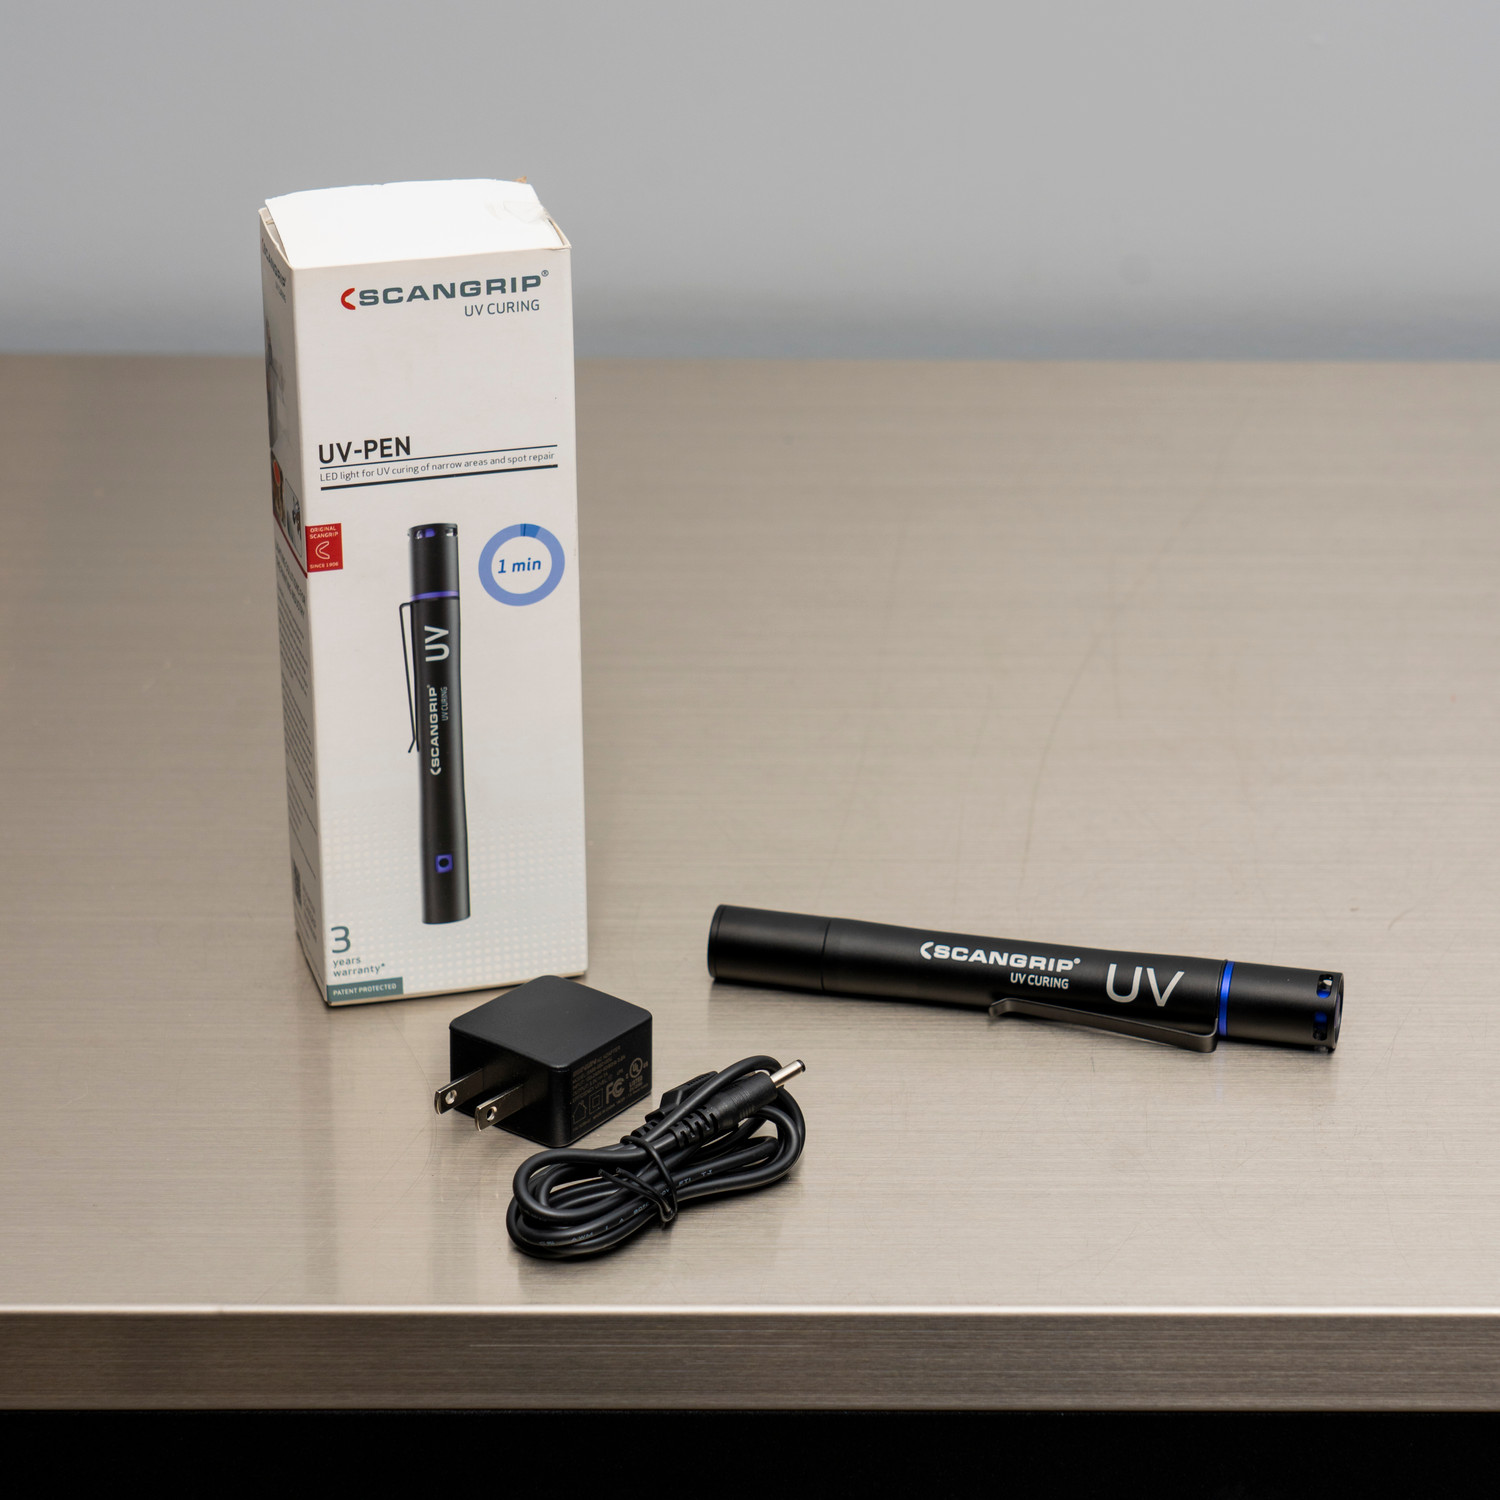 Scangrip Nova UV Curing Light - Innovative Tools & Technologies